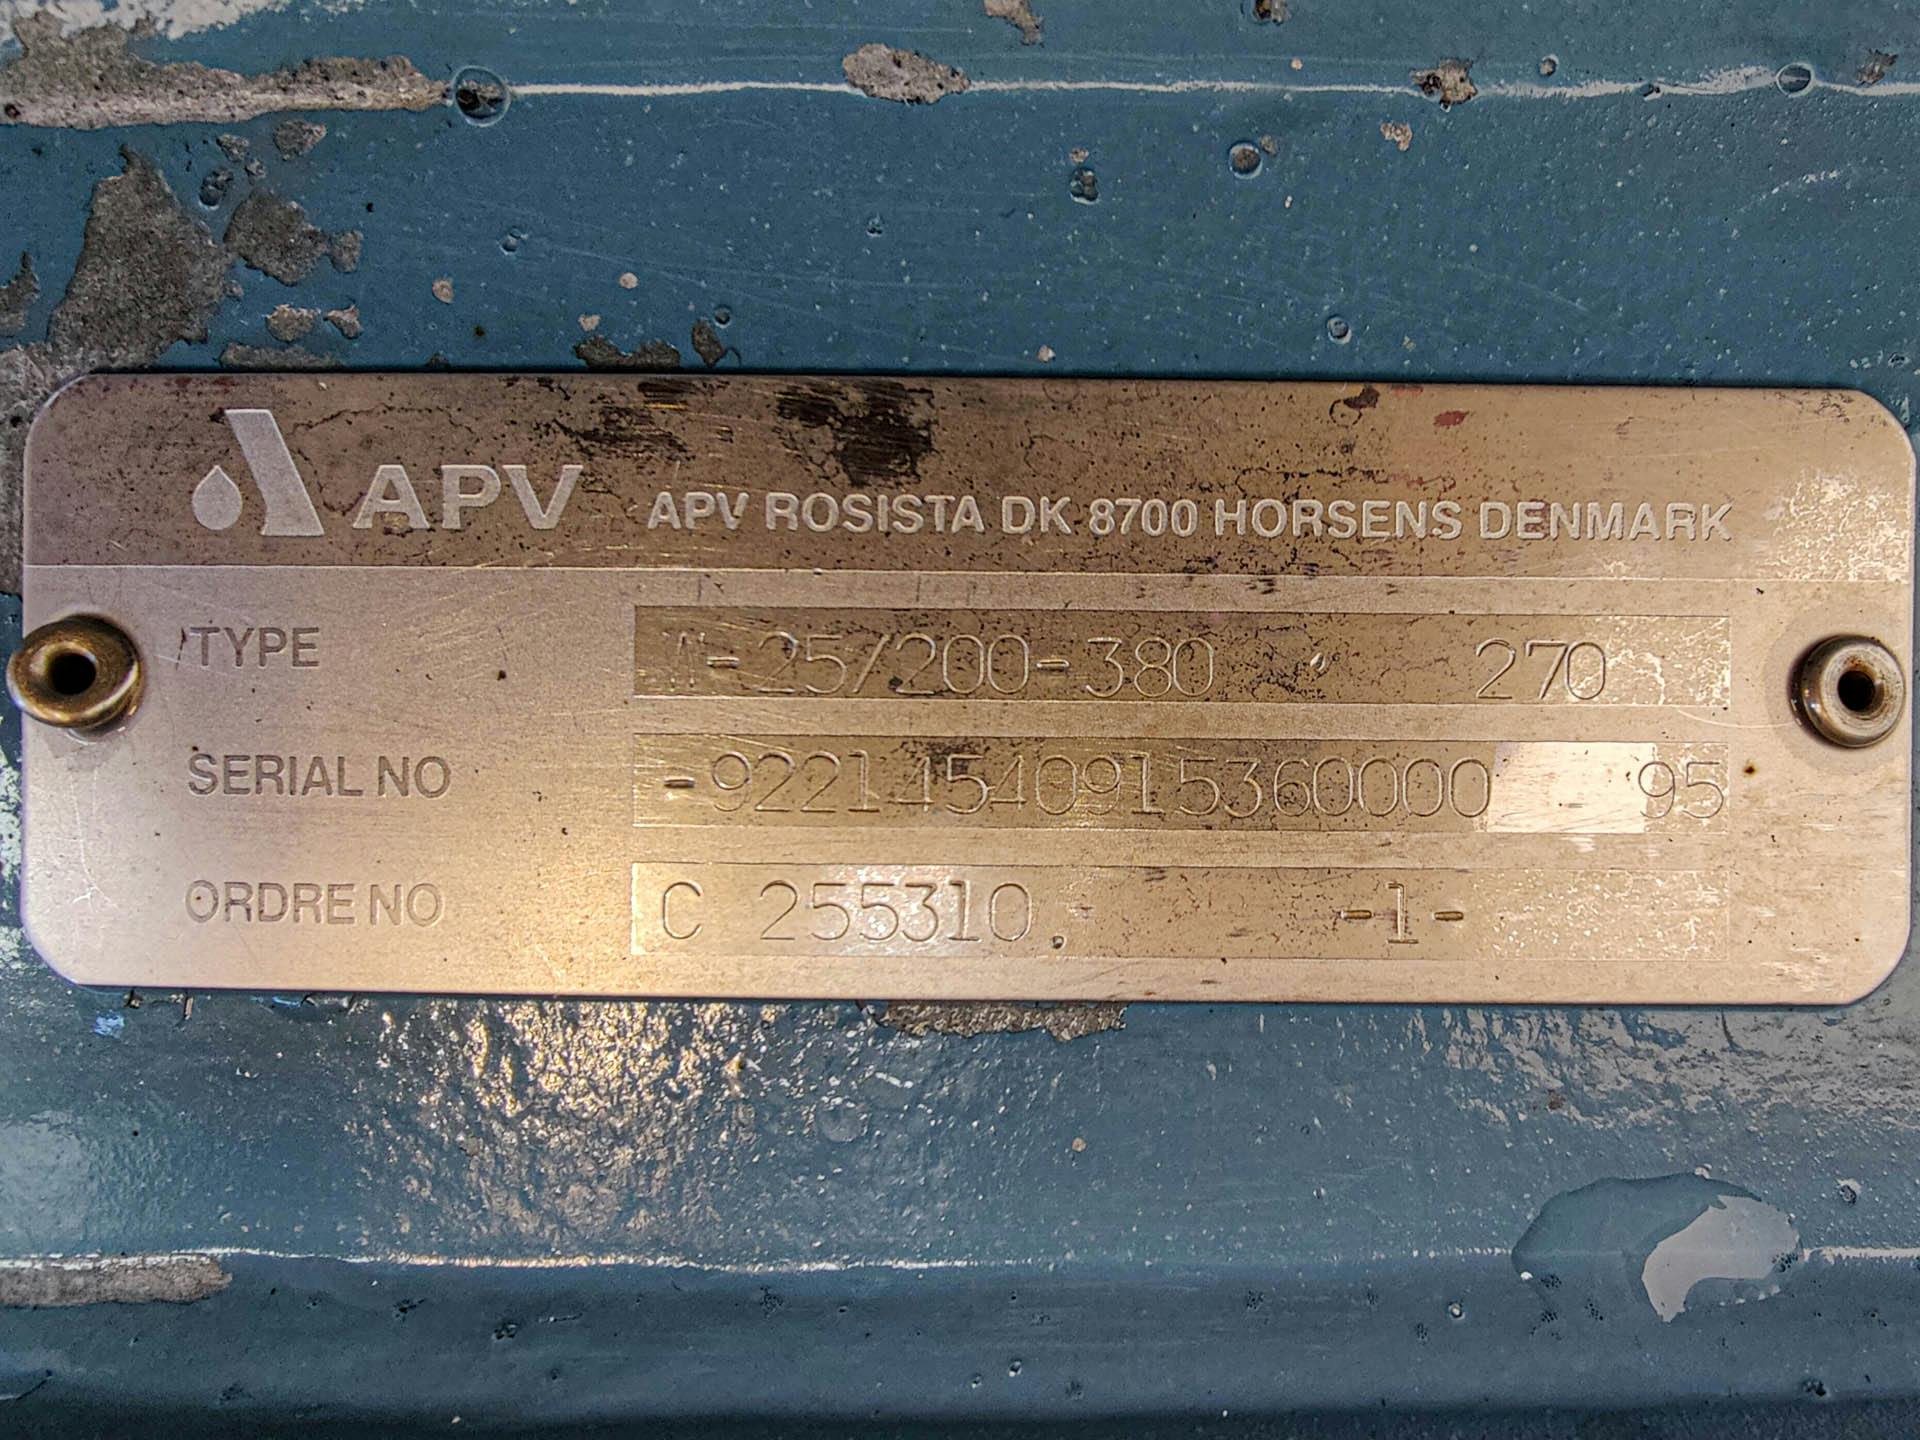 APV Rosista W-25/200-380 - Центробежный насос - image 6